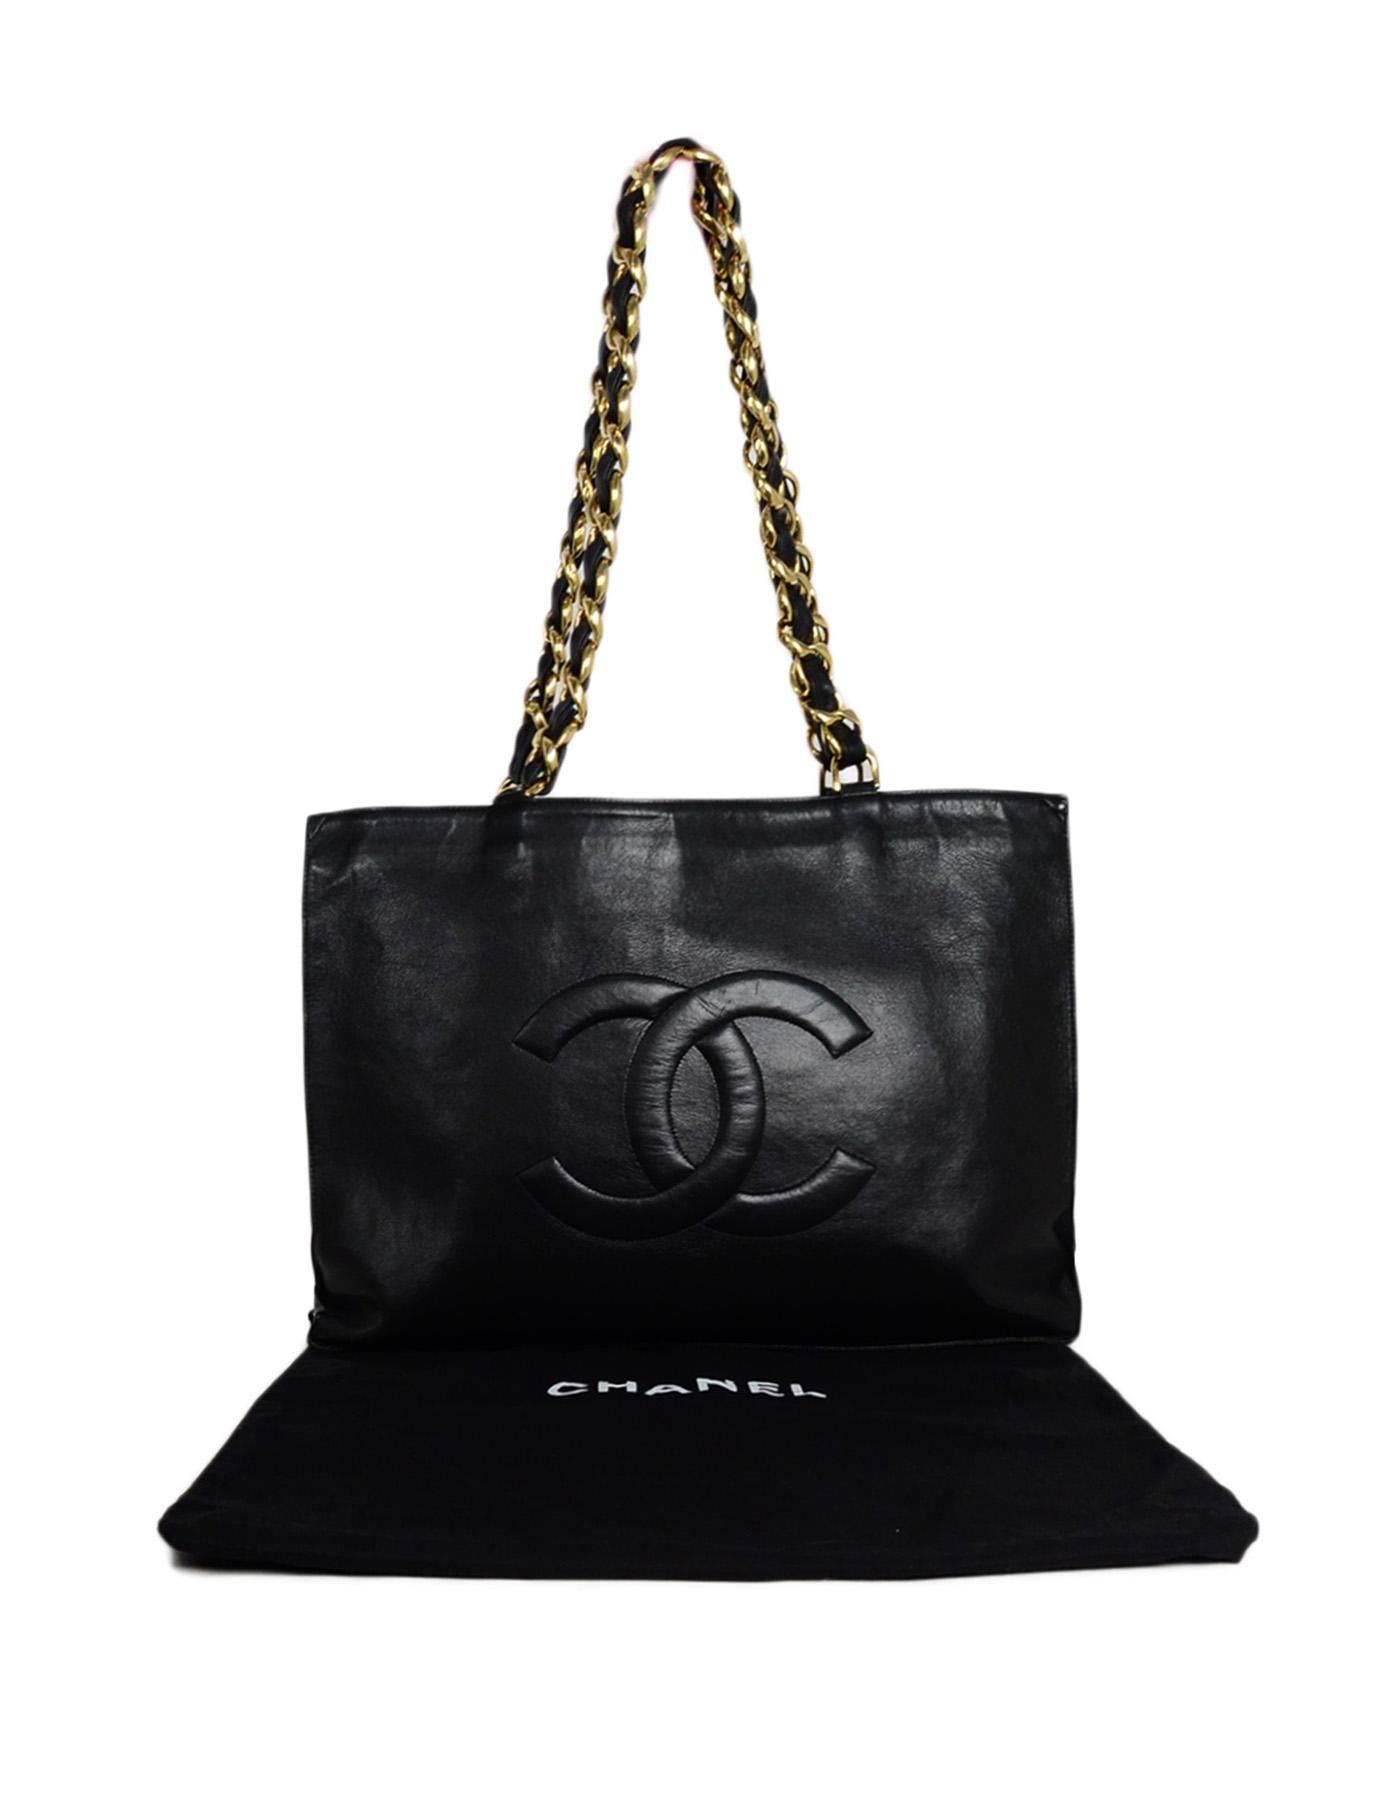 Chanel Vintage 1990s Black Lambskin Leather CC Tote Bag 8